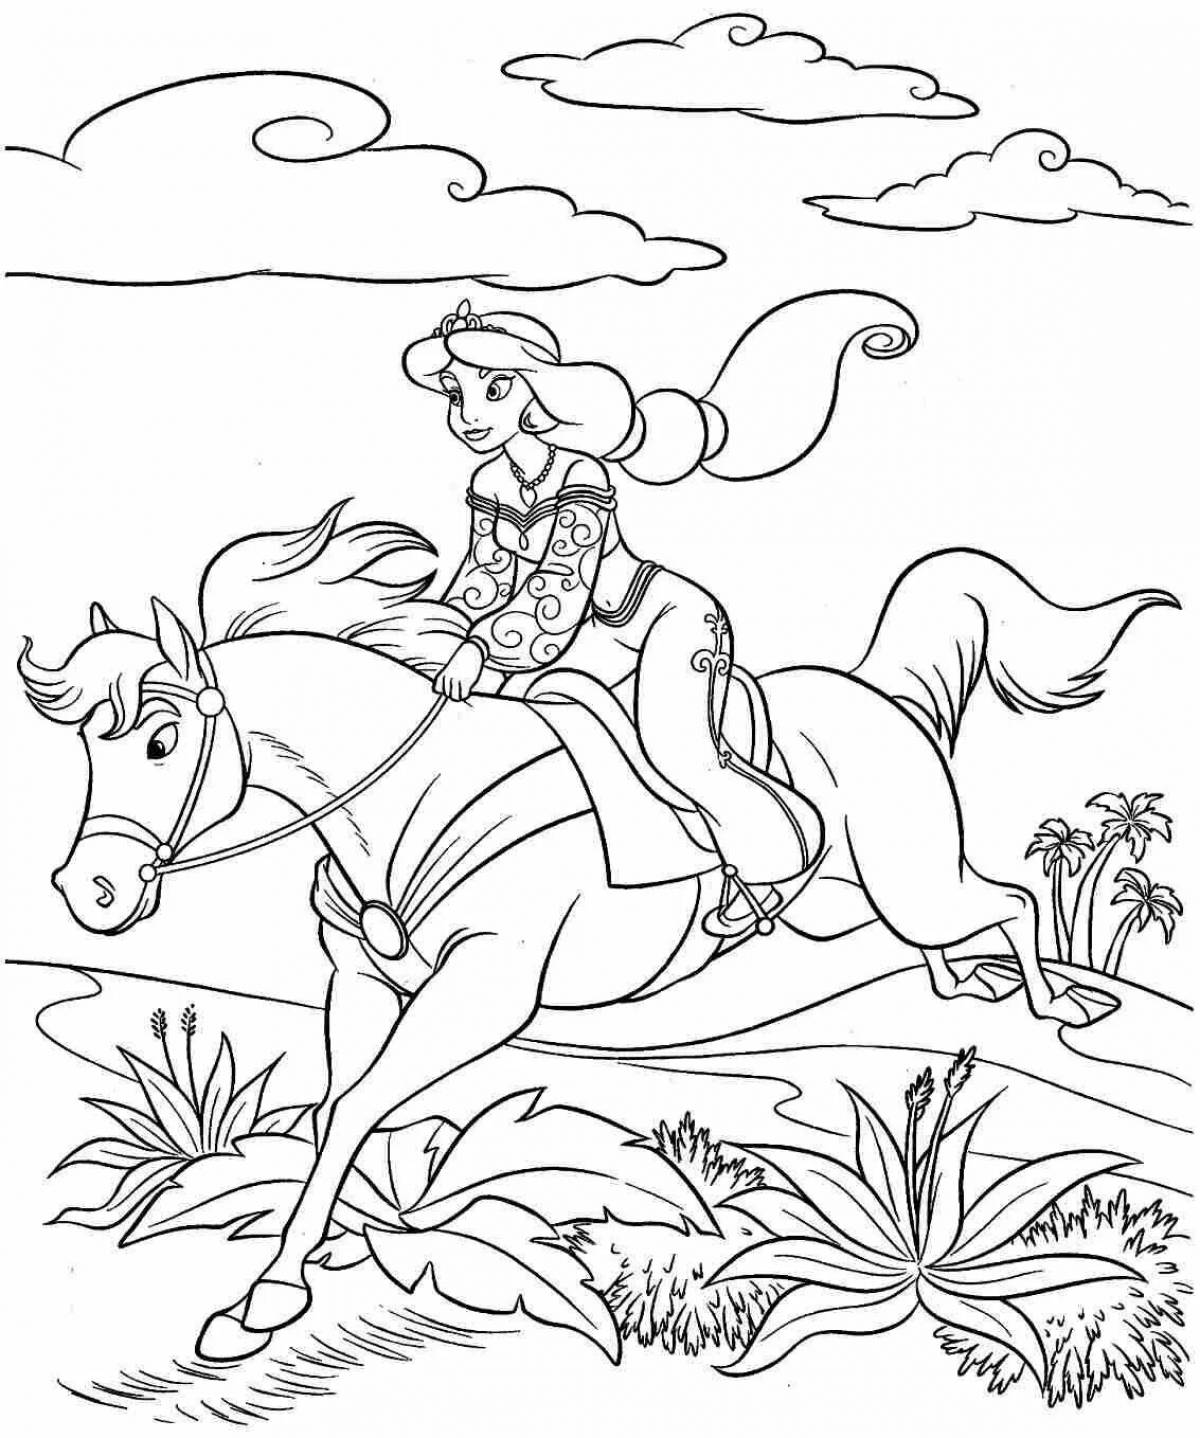 Princess on a horse #7